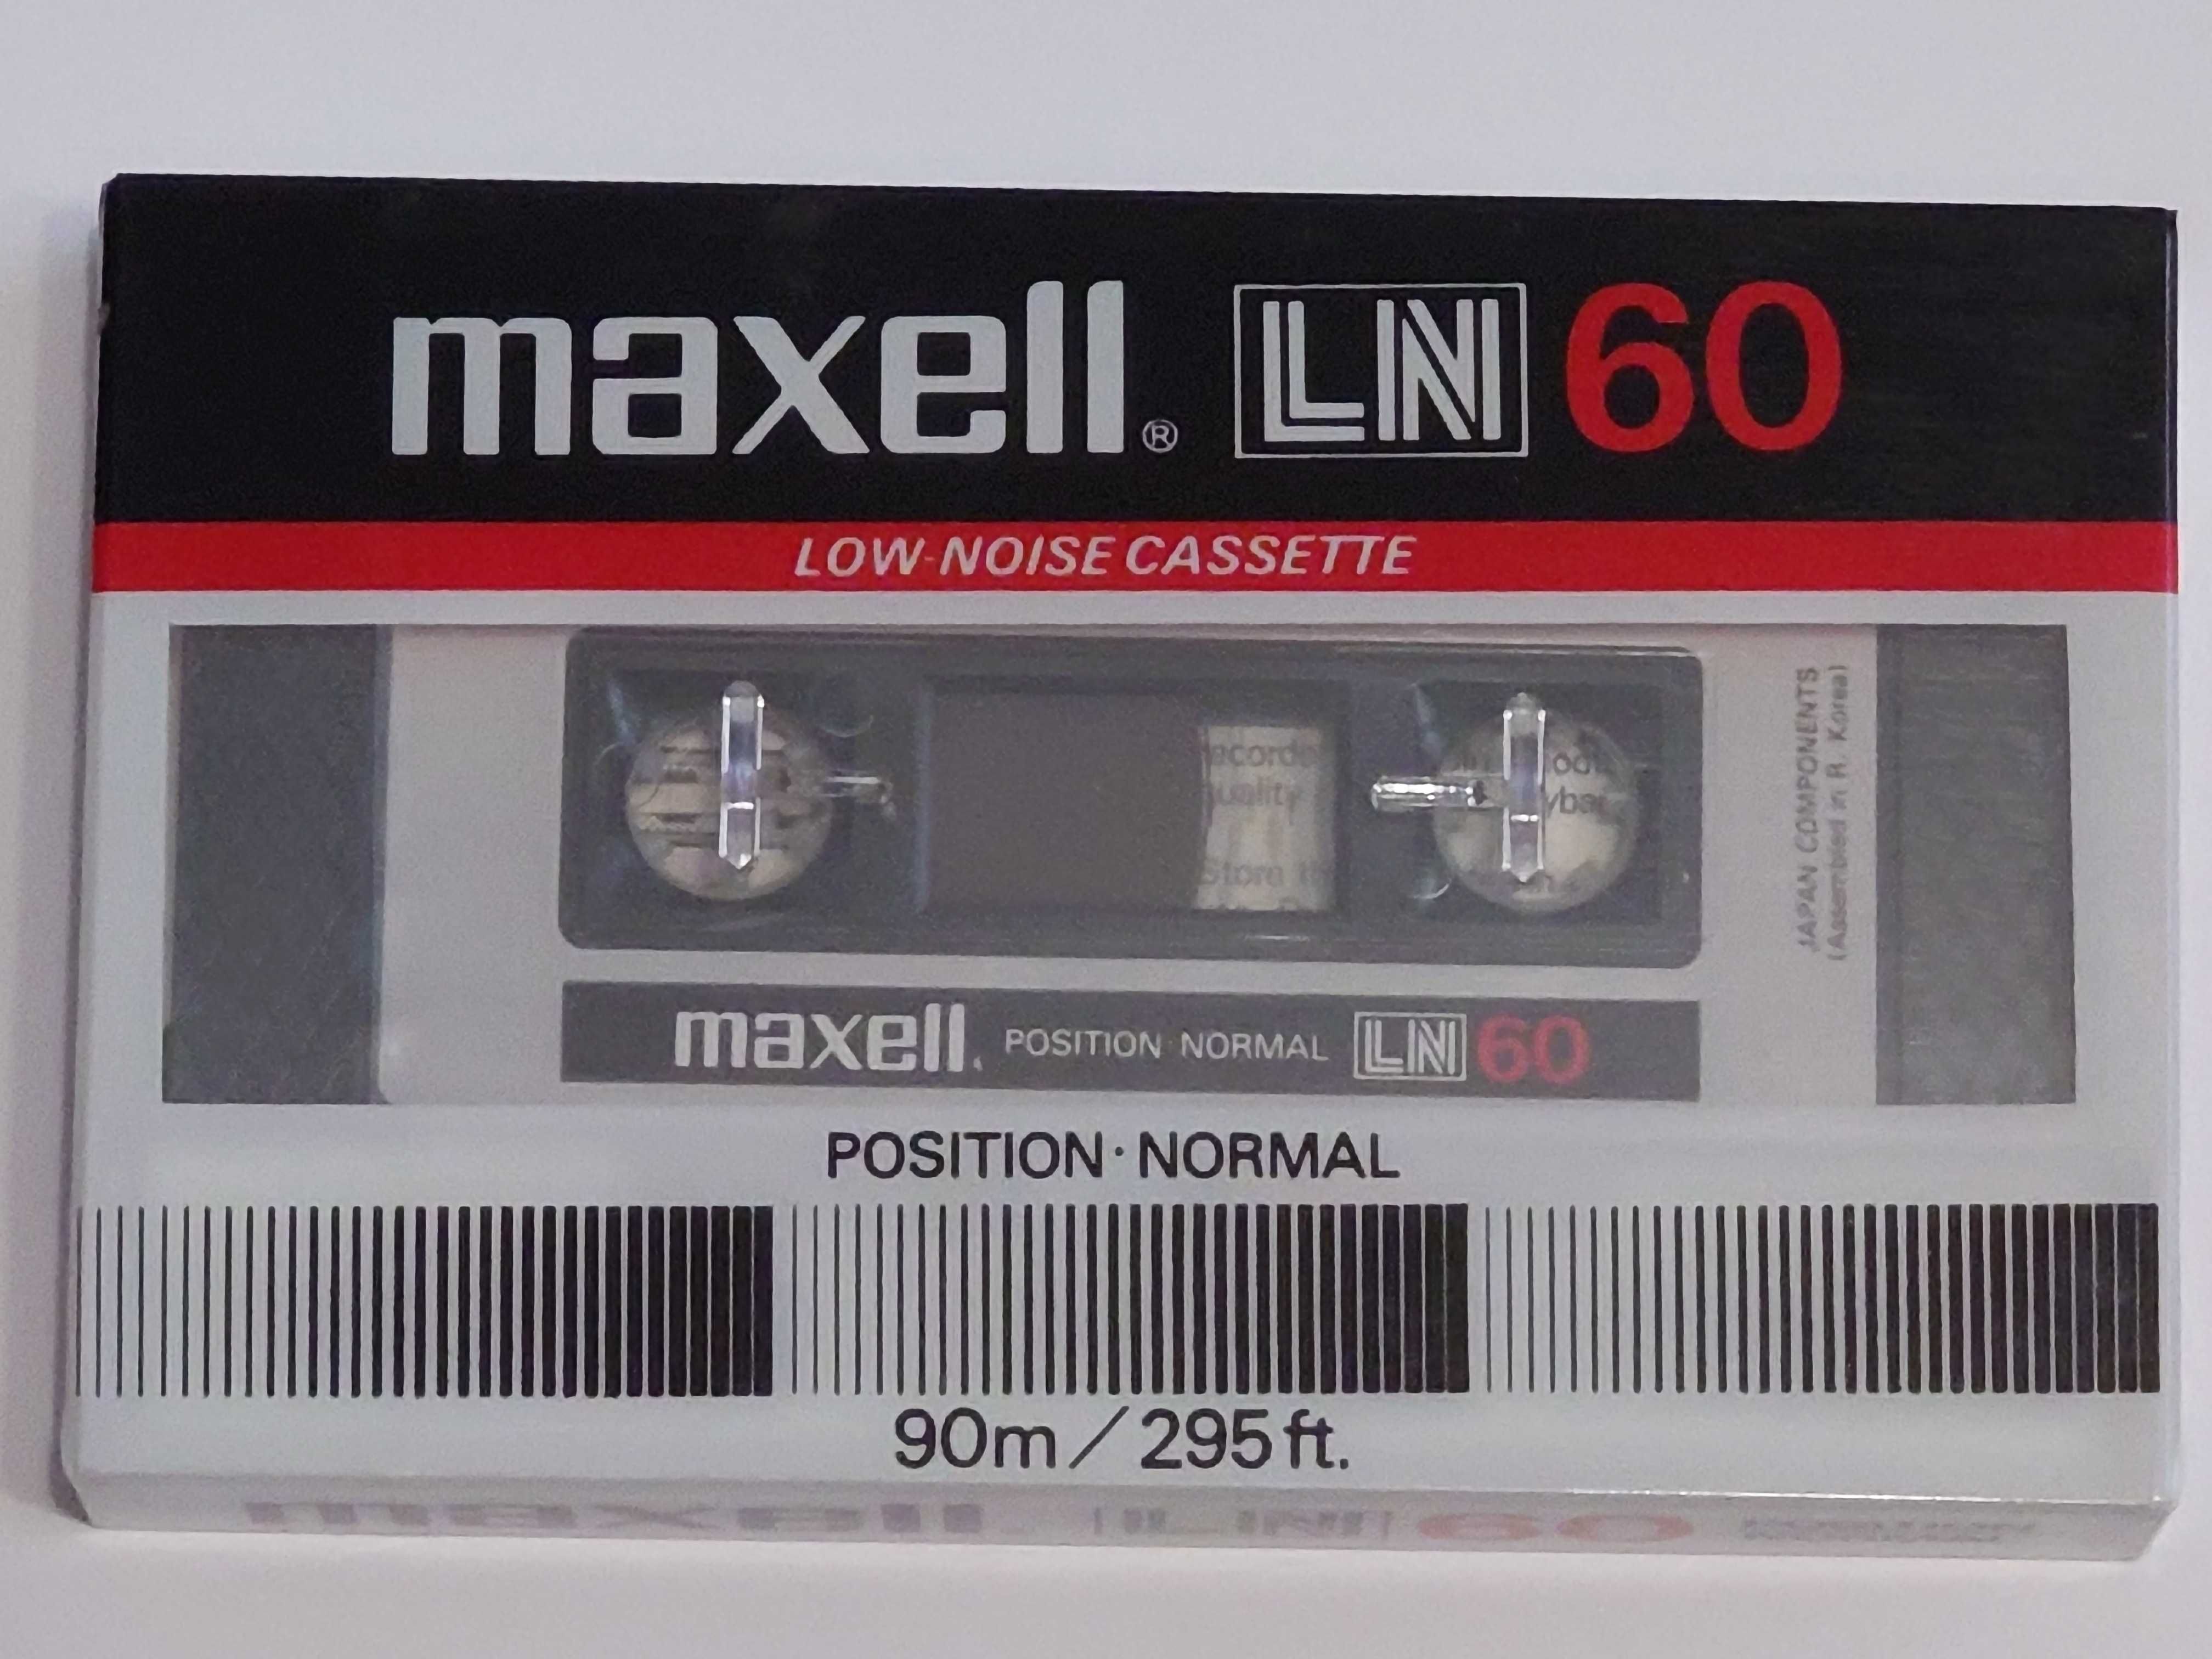 Maxell LN 60 model na lata 1982/1983 rynek Amerykański